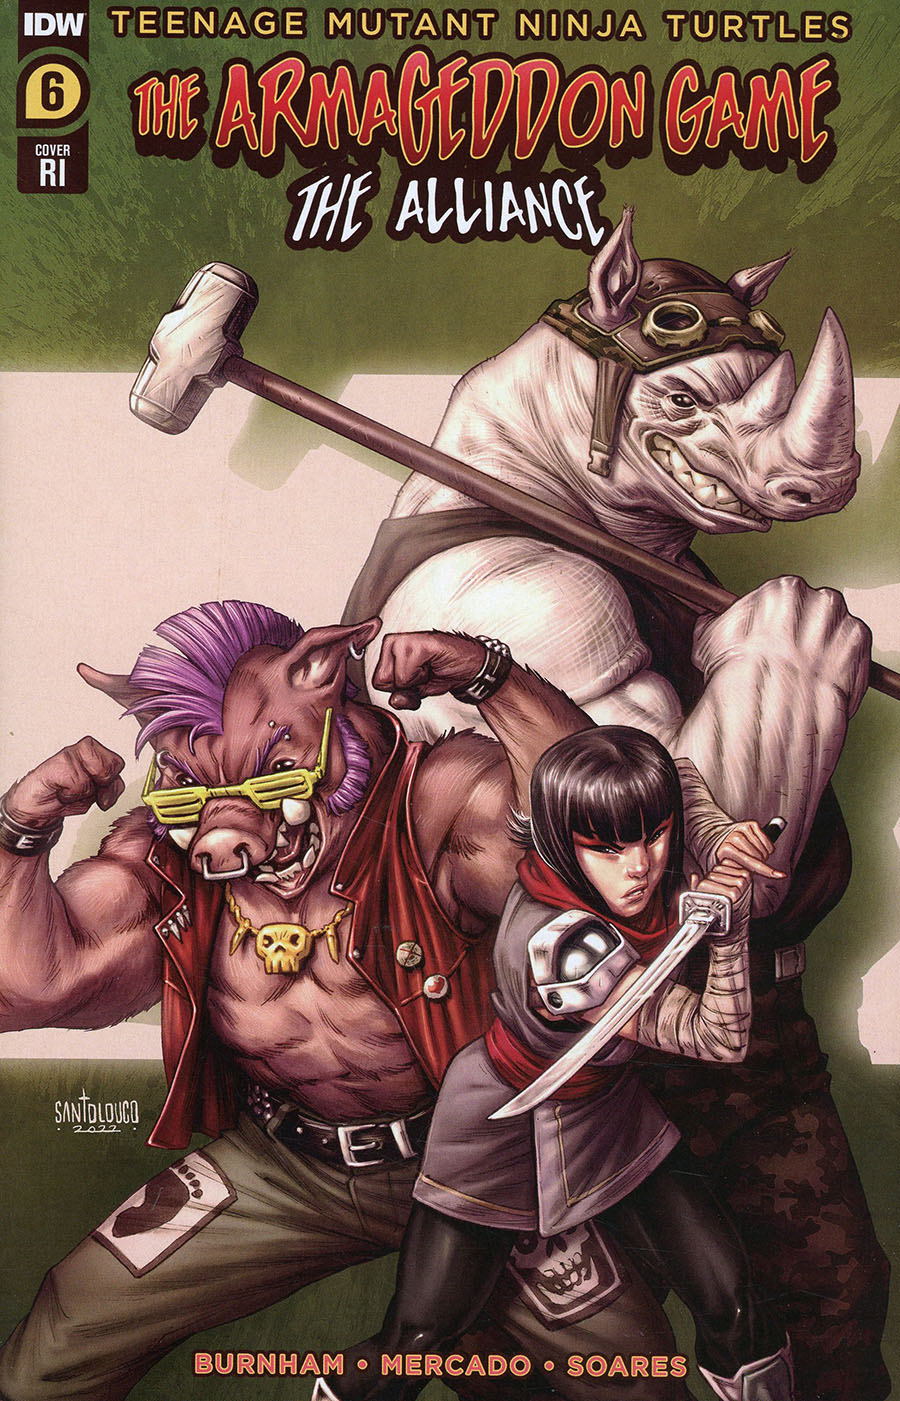 Teenage Mutant Ninja Turtles Armageddon Game The Alliance #6 Cover C Incentive Mateus Santolouco Variant Cover